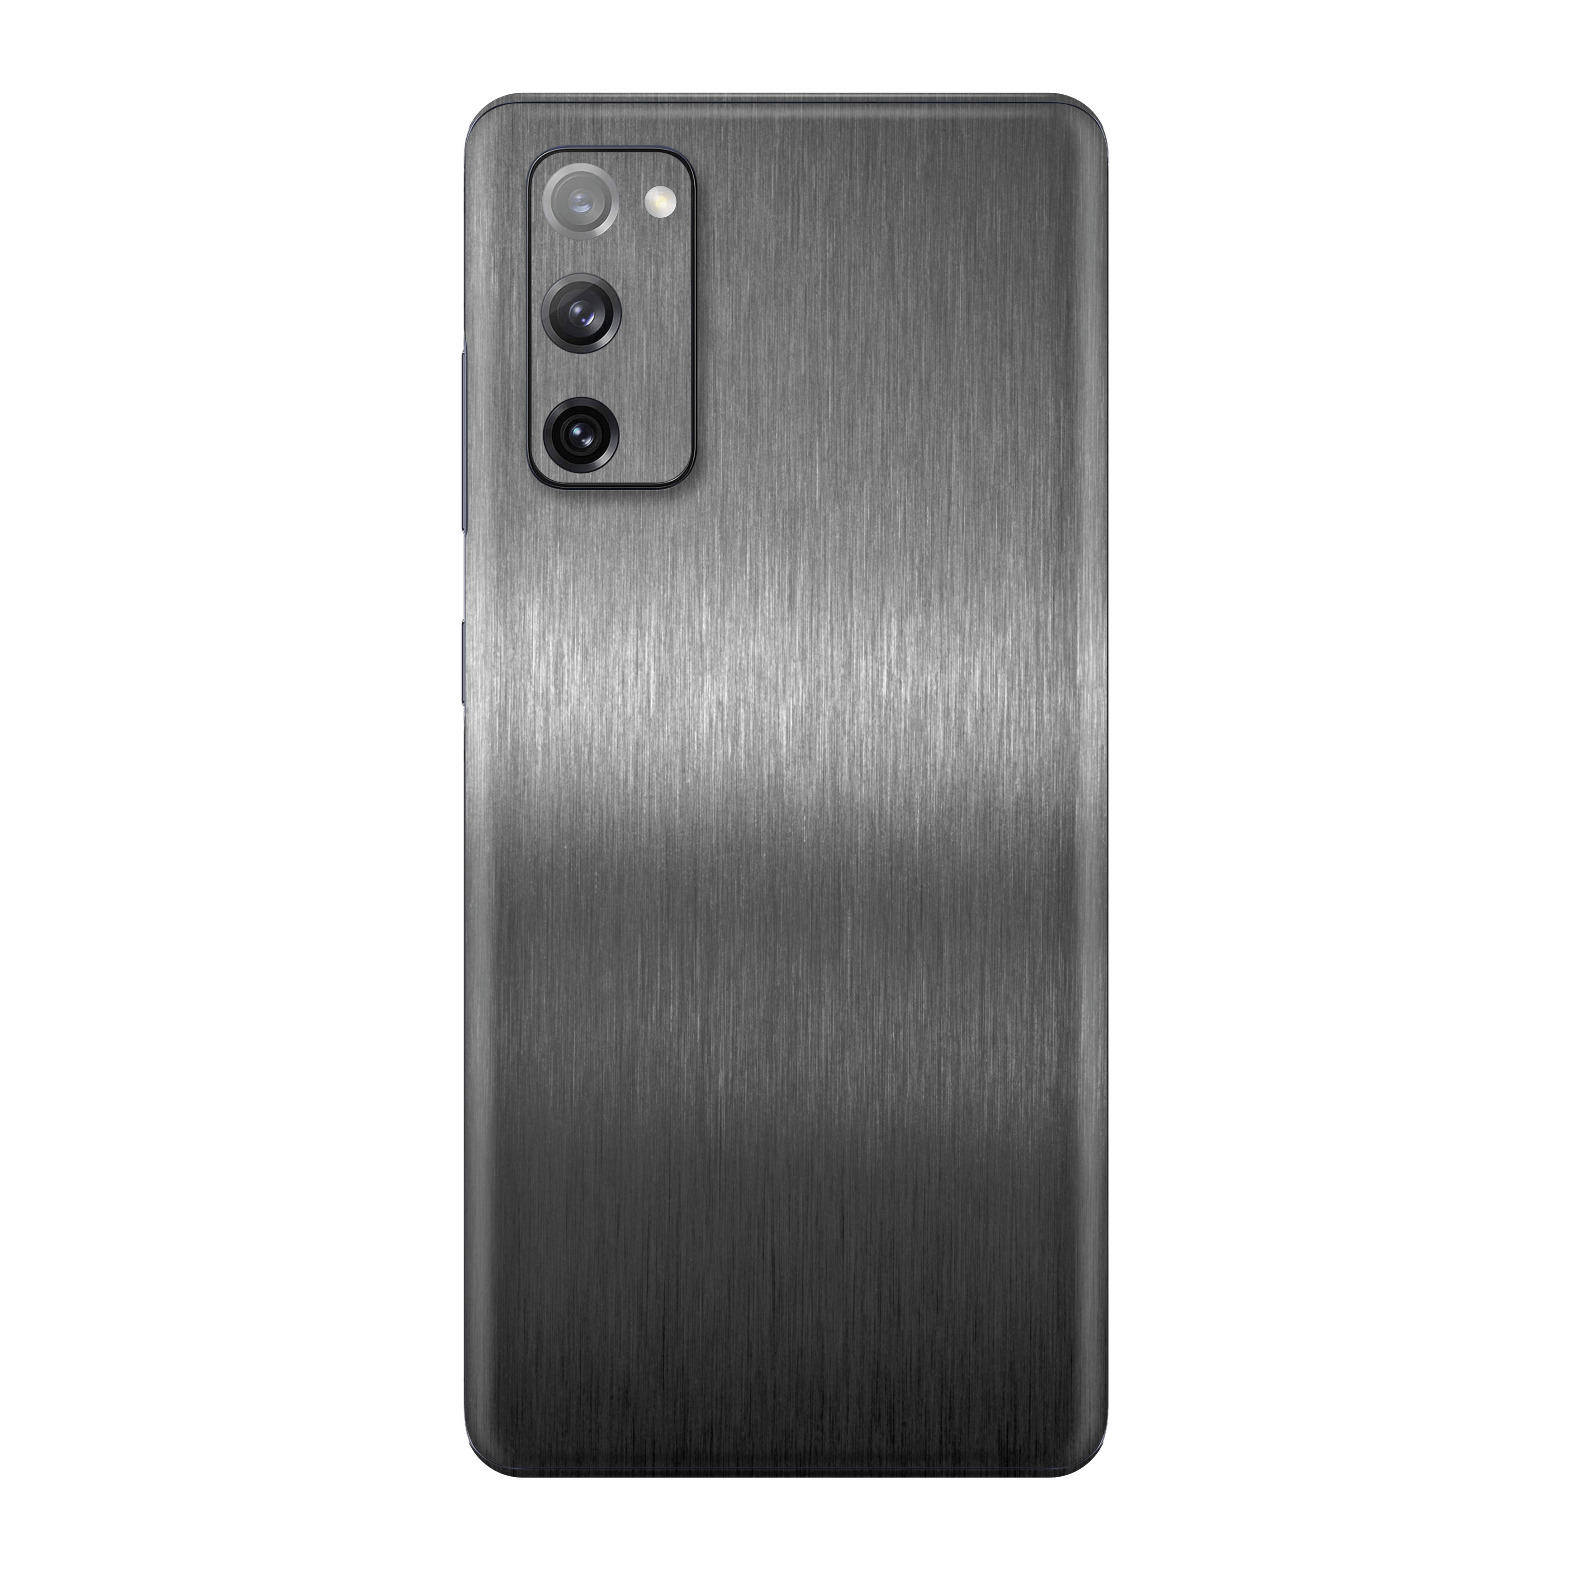 Samsung Galaxy S20 (FE) Brushed Metal Titanium Metallic Skin Wrap Sticker Decal Cover Protector by EasySkinz | EasySkinz.com